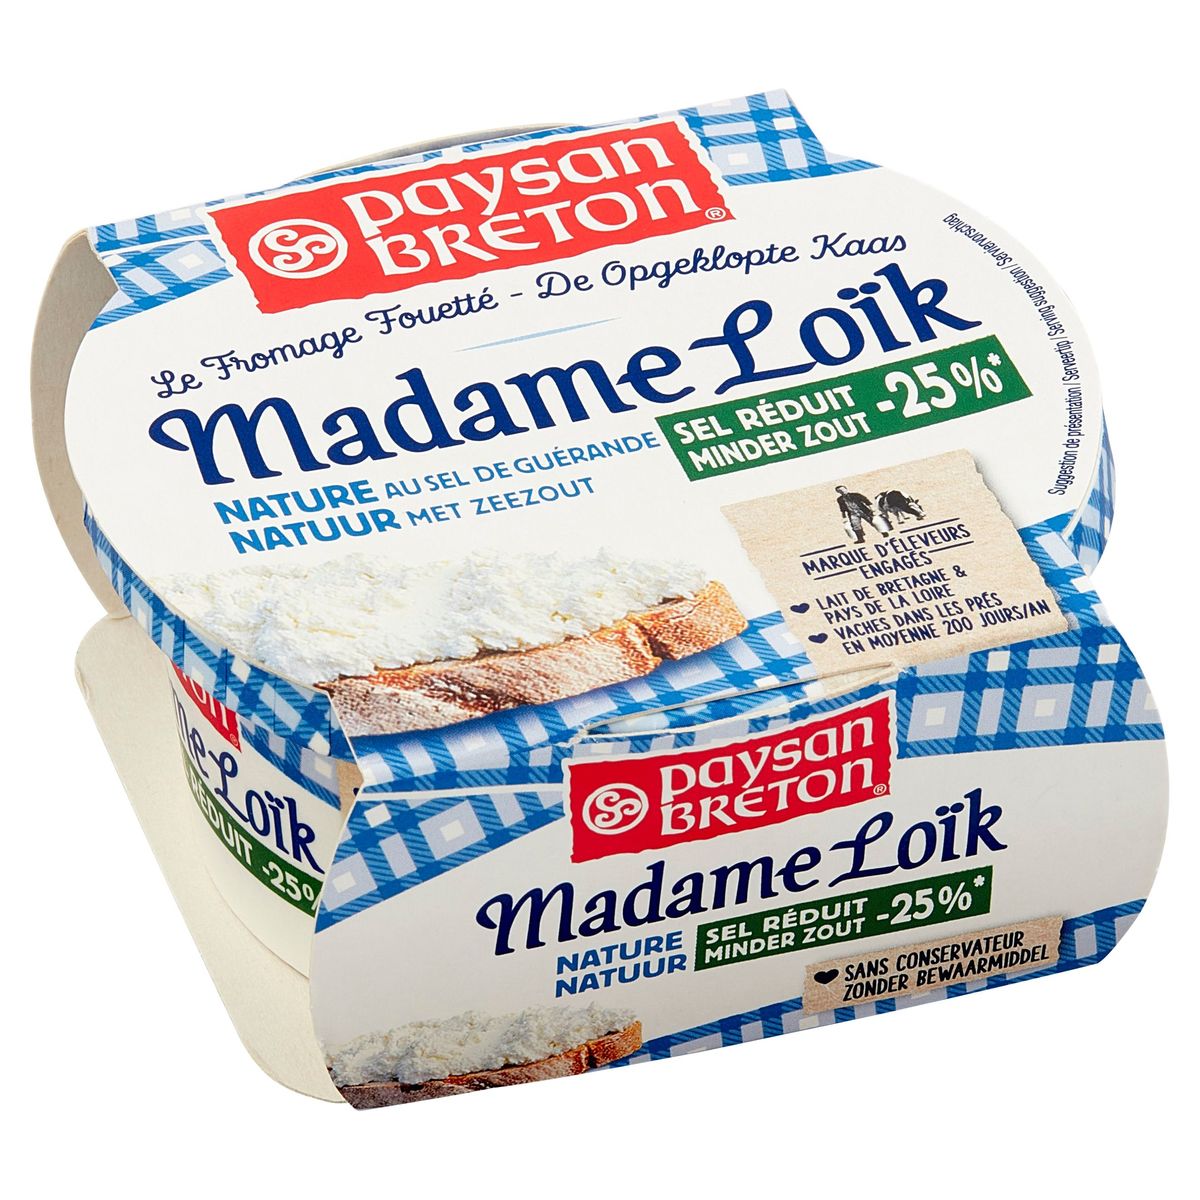 Paysan Breton Fromage Fouetté Madame Loïk Nature 150g Sel réduit -25%